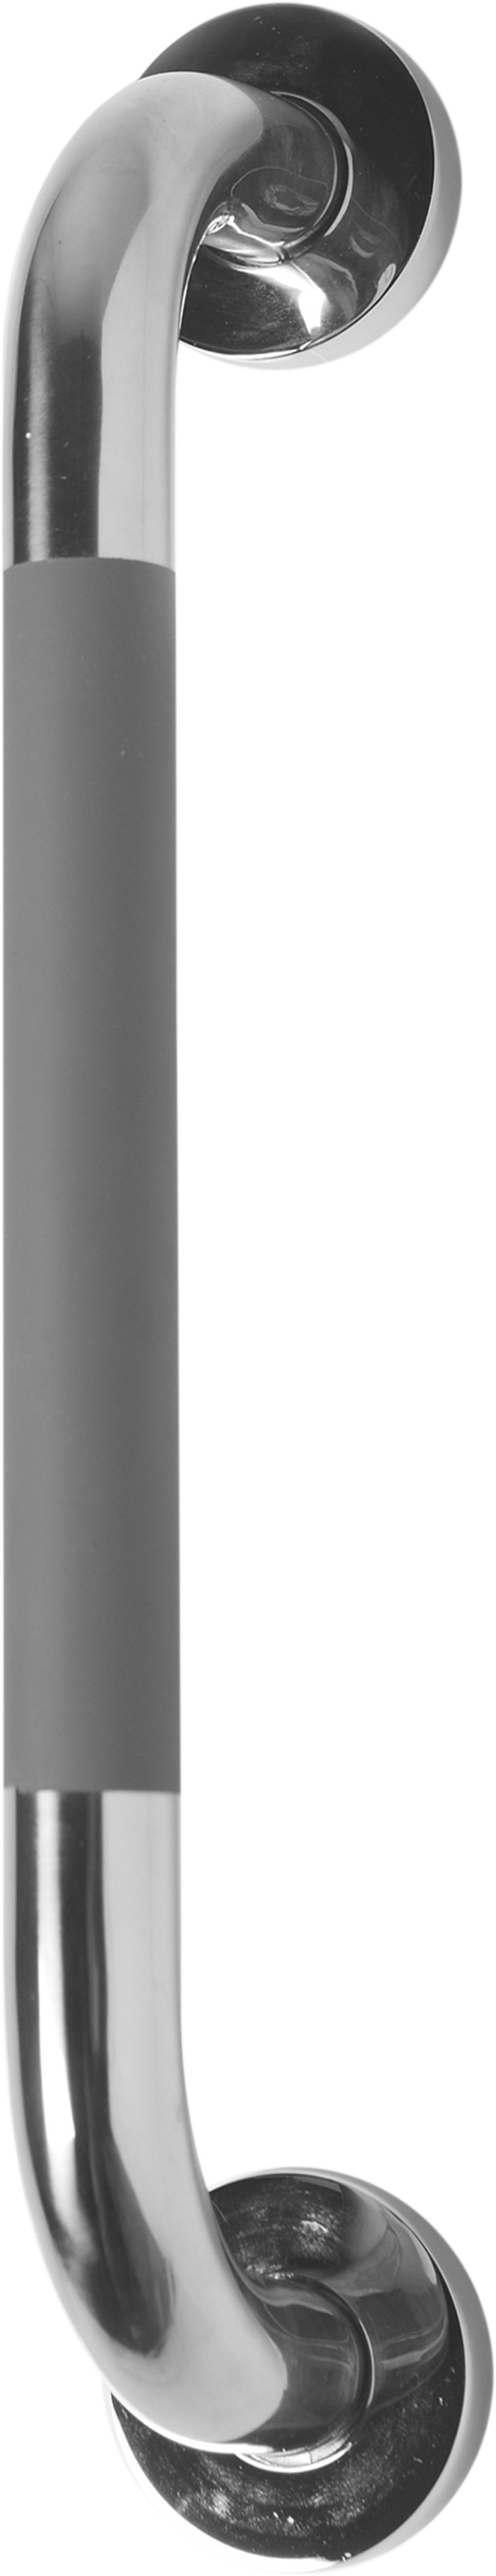 Asidero de baño 2.5x33x33 cm gris / plata